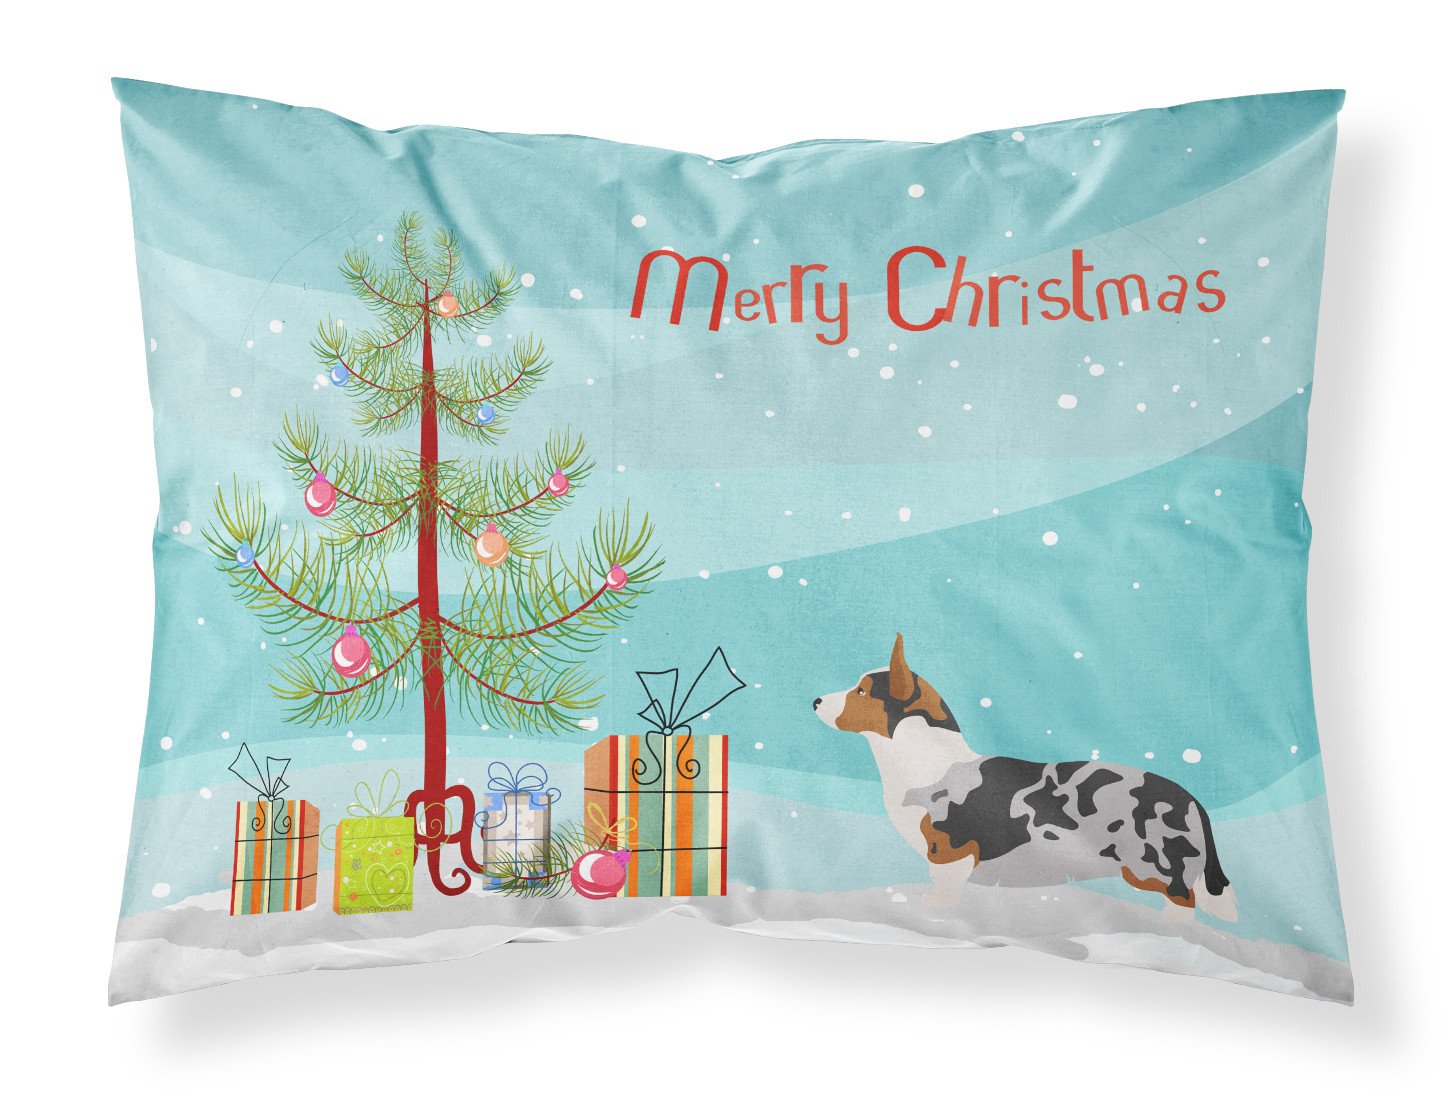 Welsh Corgi Cardigan Christmas Fabric Standard Pillowcase BB8475PILLOWCASE by Caroline's Treasures